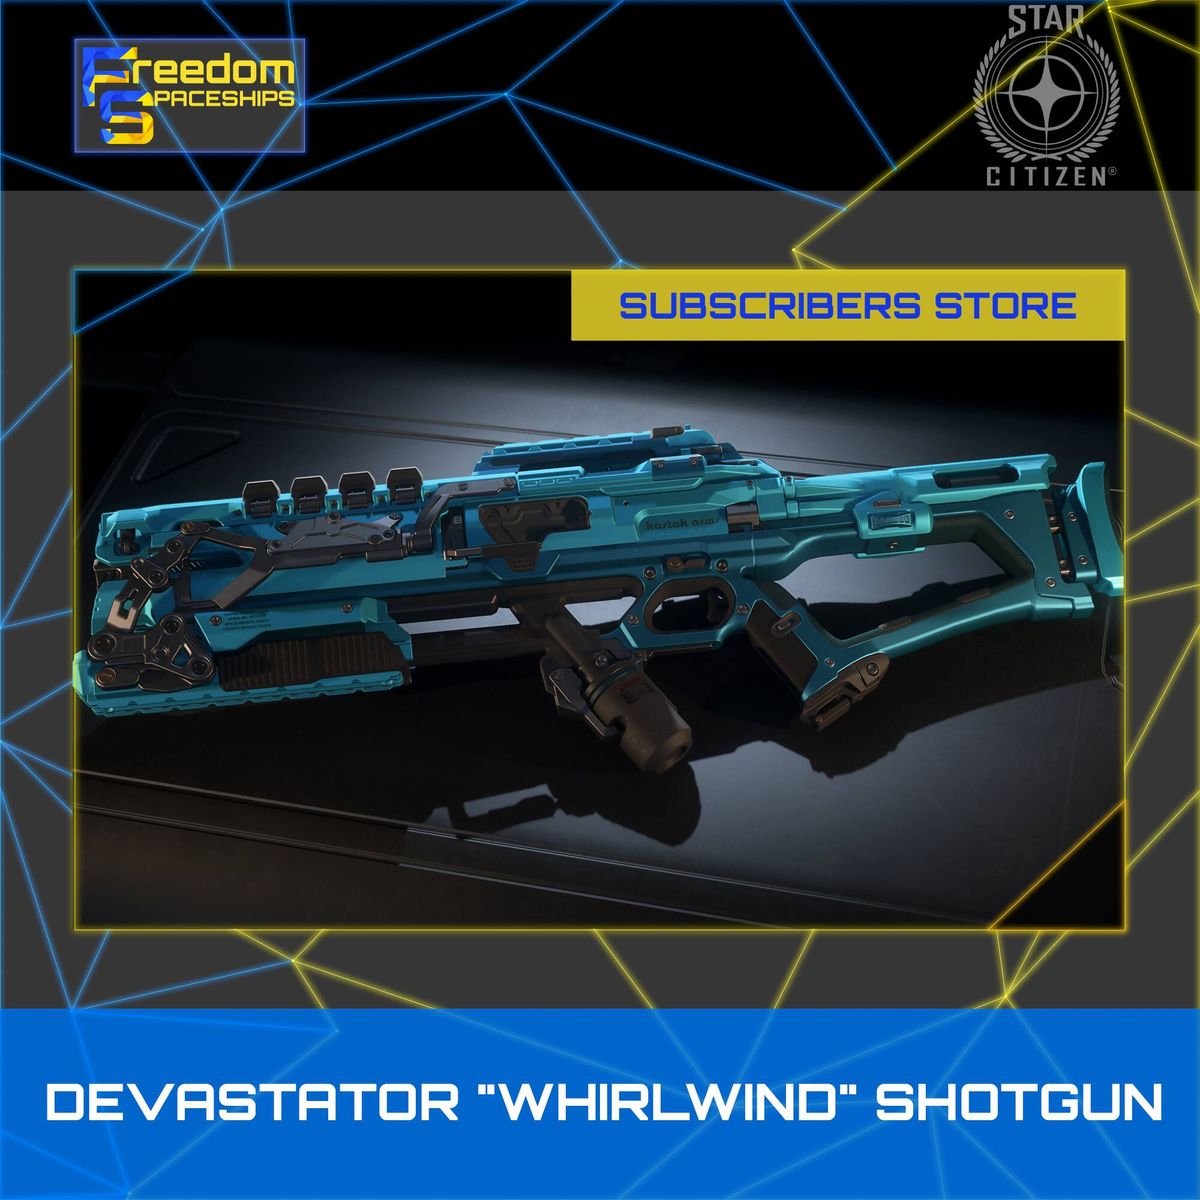 Subscribers Store - Devastator Whirlwind Shotgun